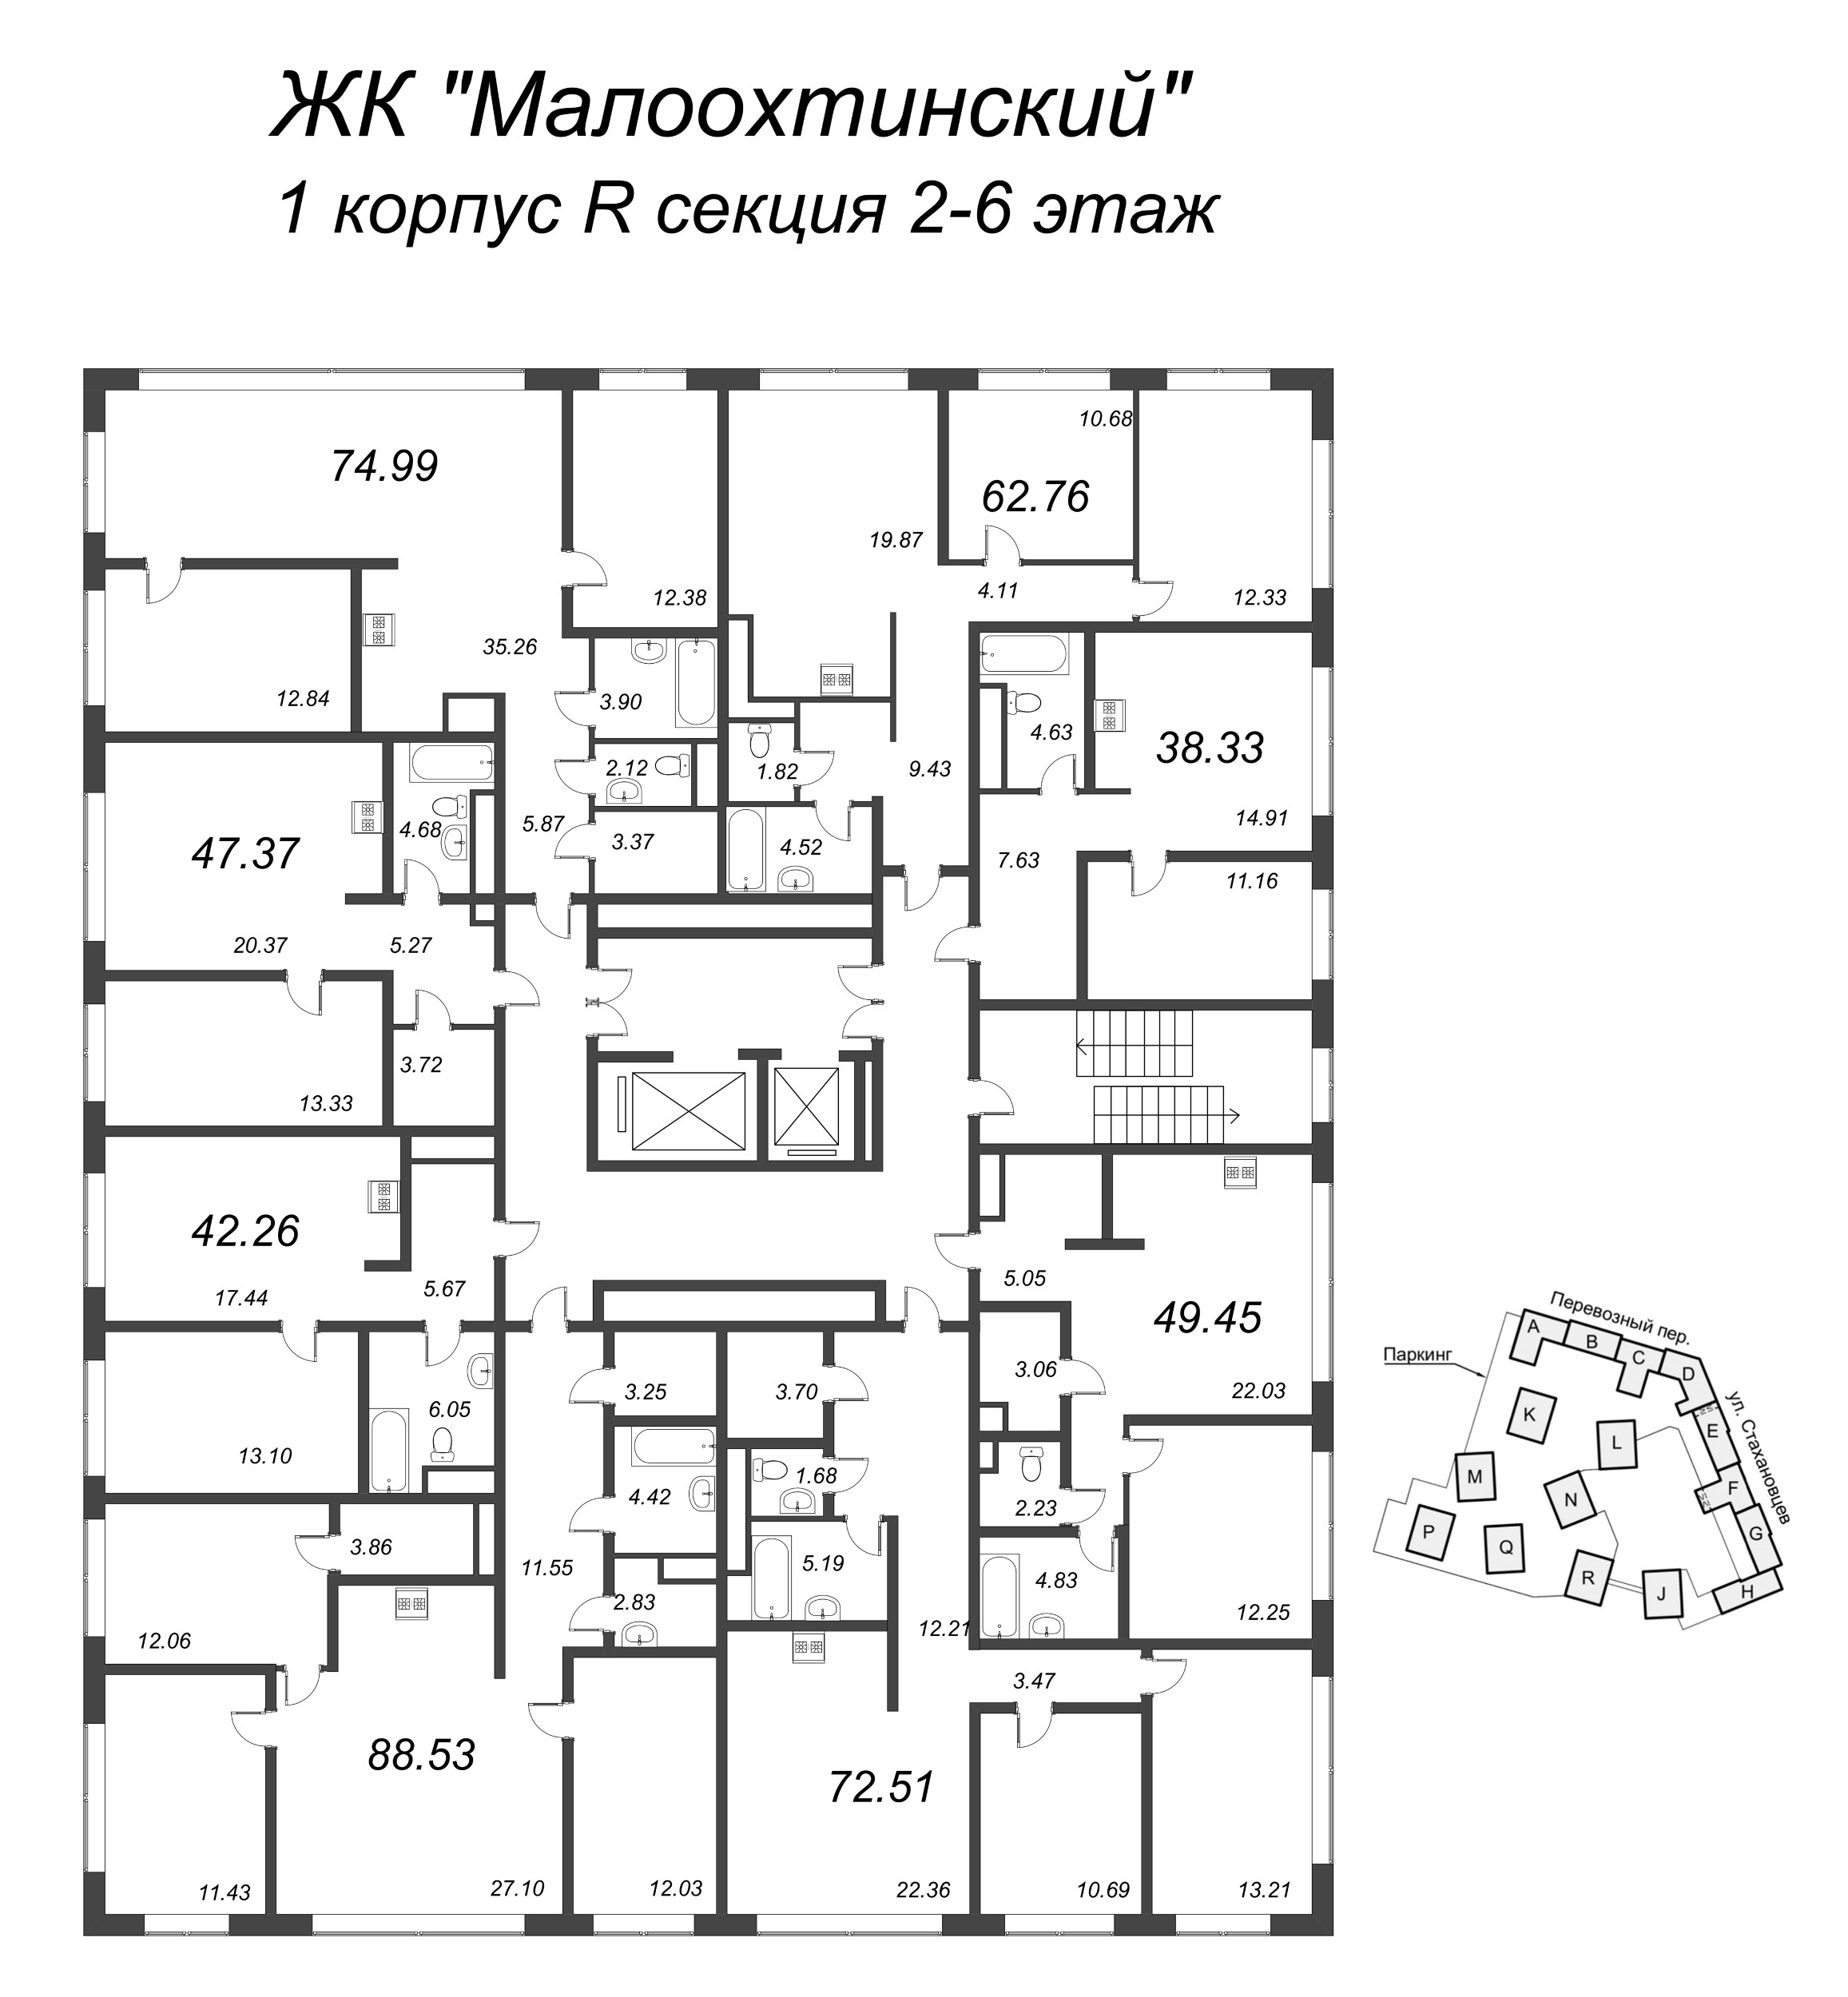 3-комнатная (Евро) квартира, 75.2 м² - планировка этажа